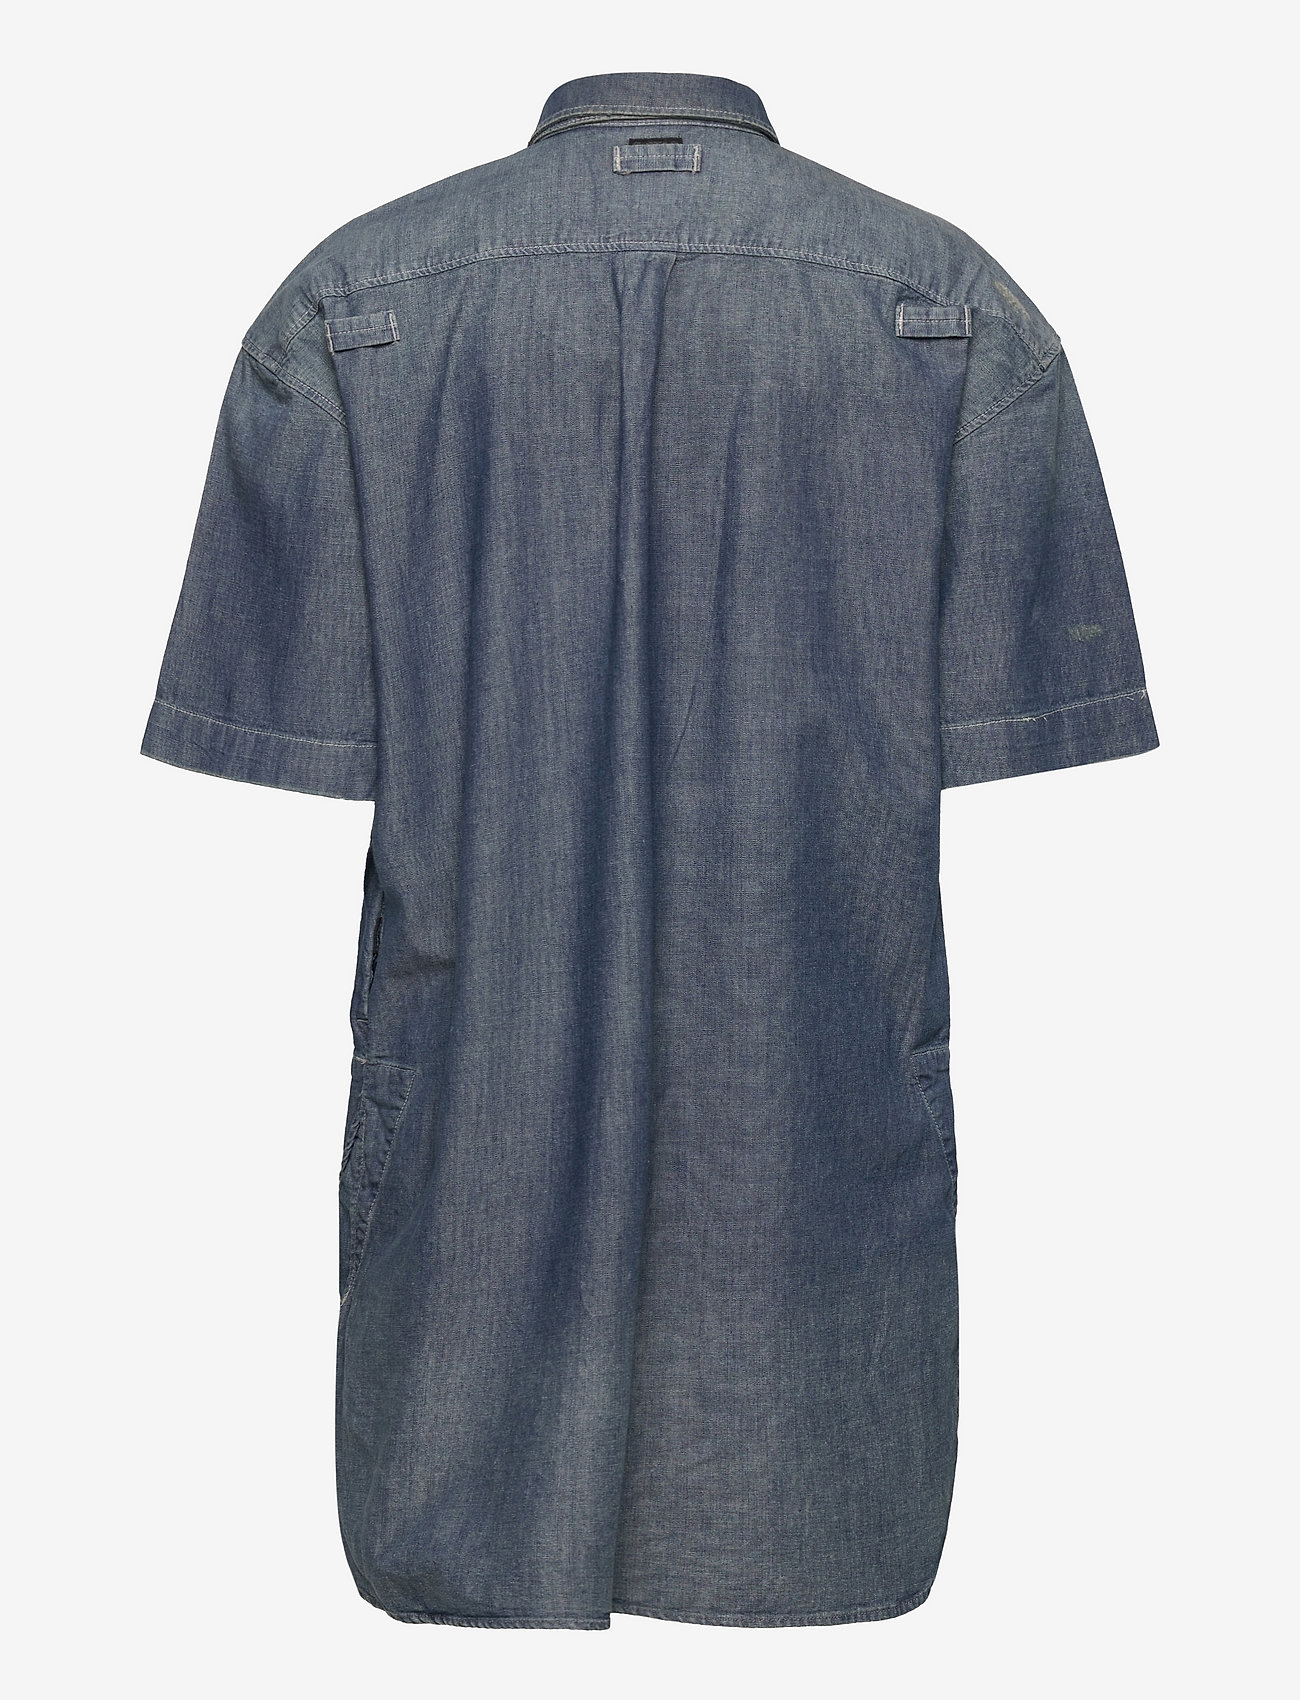 G-Star RAW - Shirt dress ss - skjortekjoler - antic faded aegean blue - 1